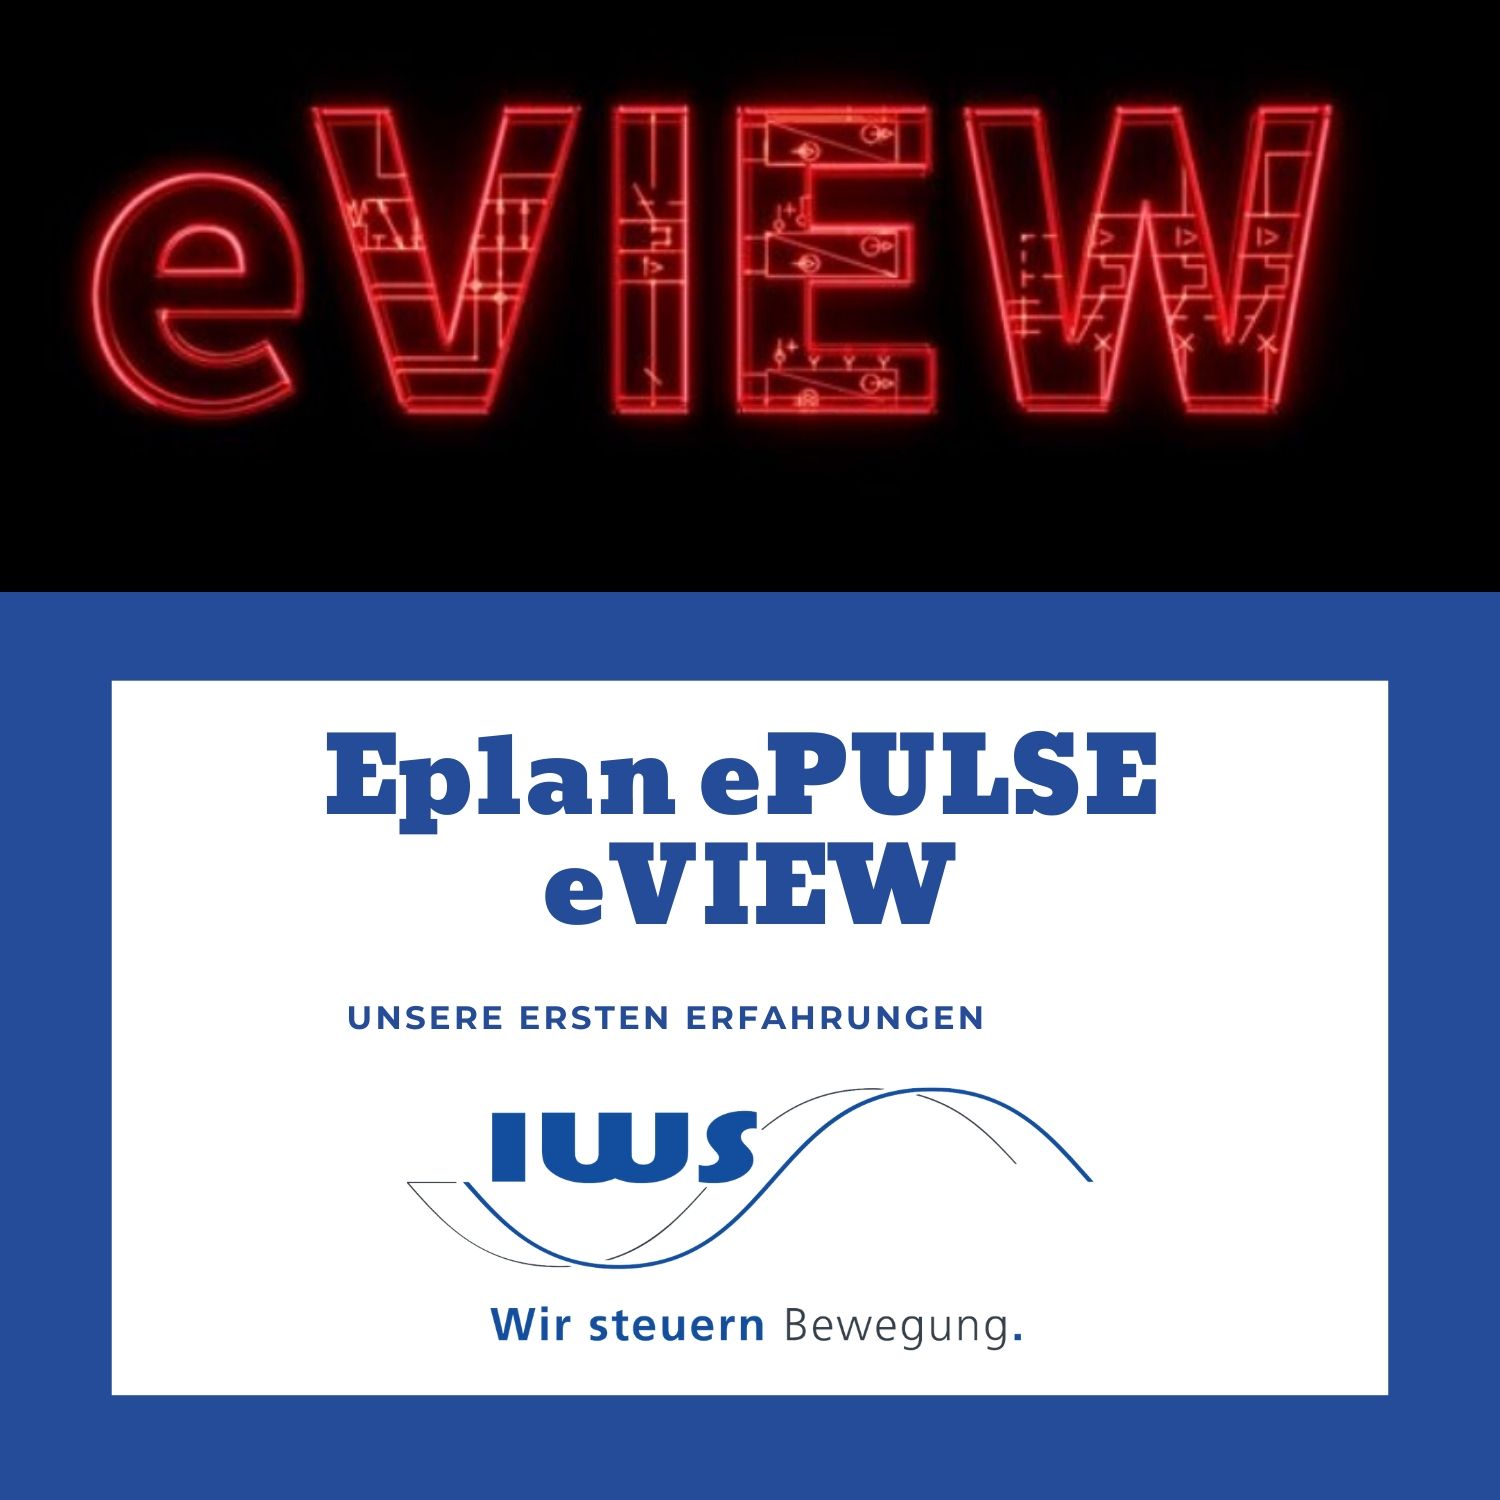 Eplan ePulse eView